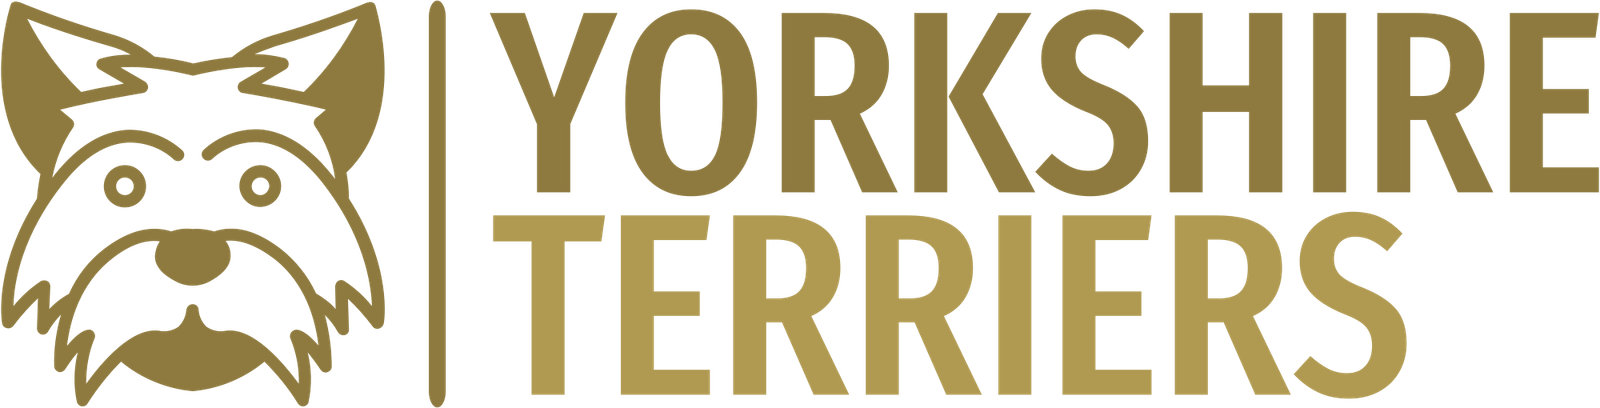 yorkshire terriers logo